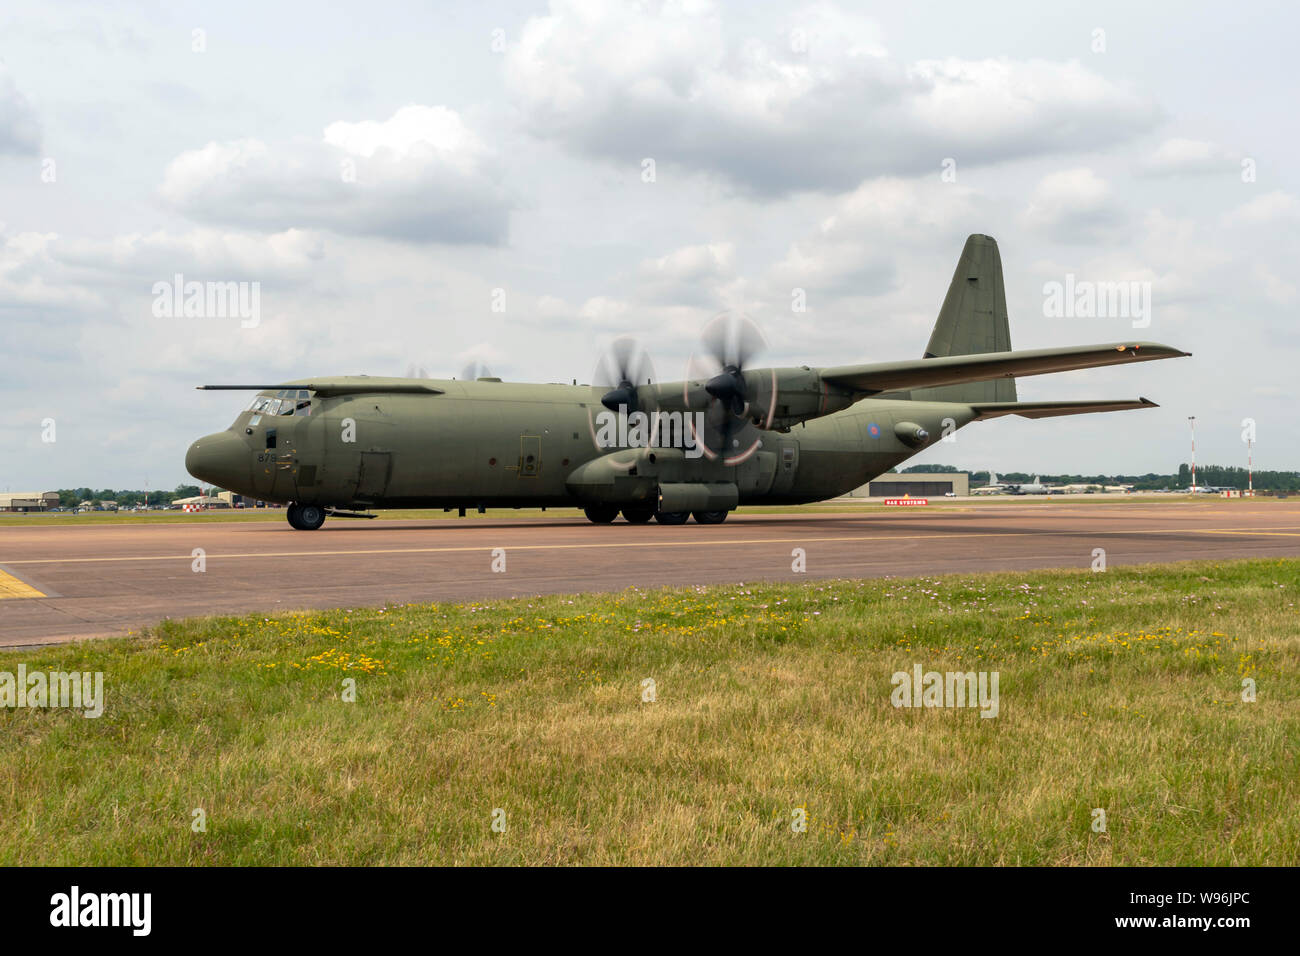 RAF C-130H Hercules at the Royal International Air Tattoo 2019 Stock Photo